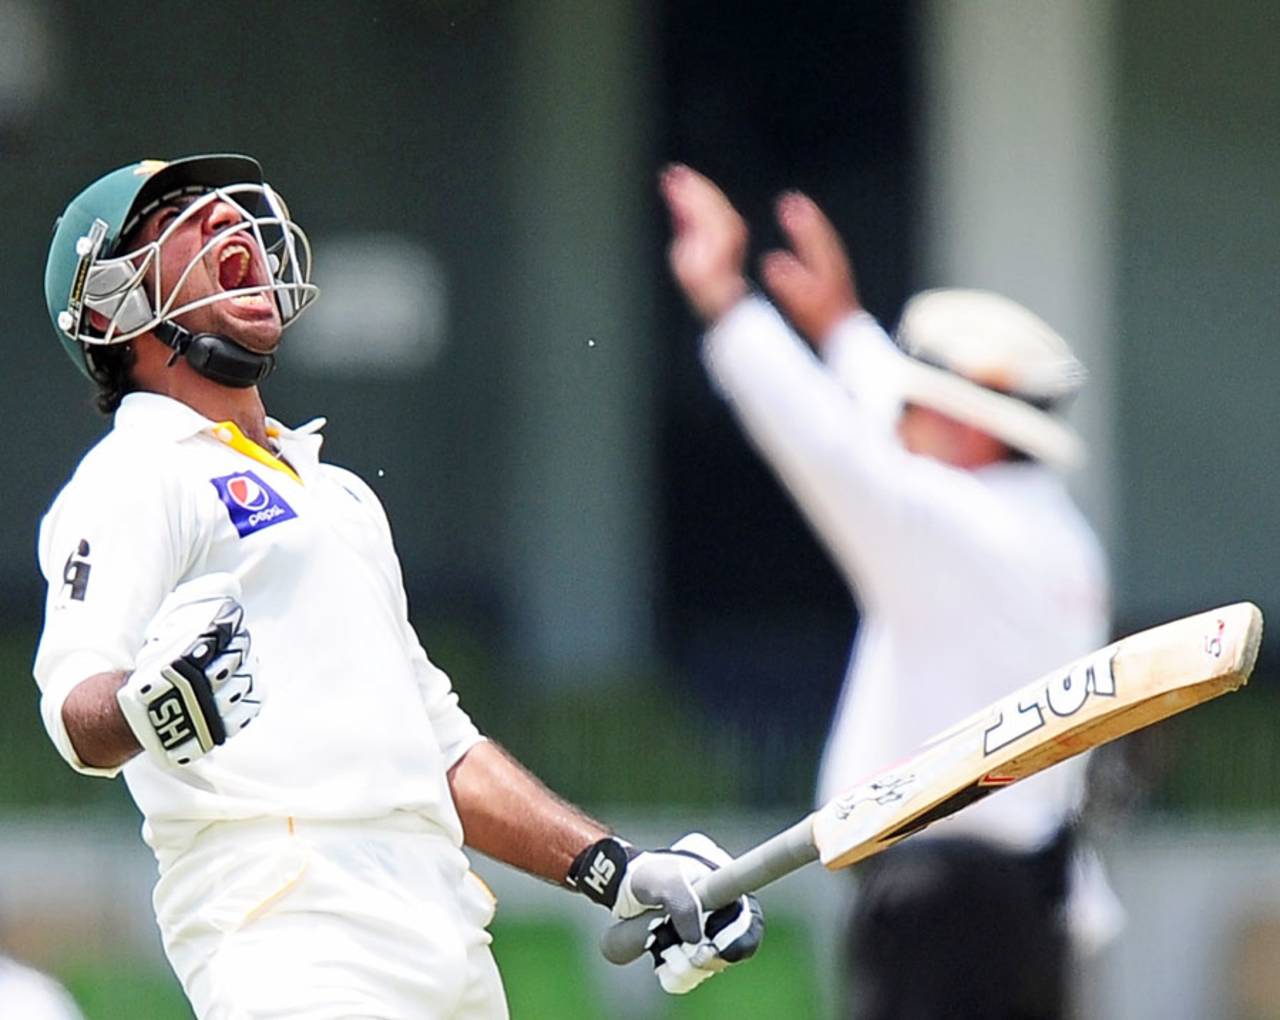 Sarfraz Ahmed became the first Pakistan wicketkeeper to score a Test century since February 2009, when Kamran Akmal made an unbeaten 158 against Sri Lanka in Karachi&nbsp;&nbsp;&bull;&nbsp;&nbsp;AFP